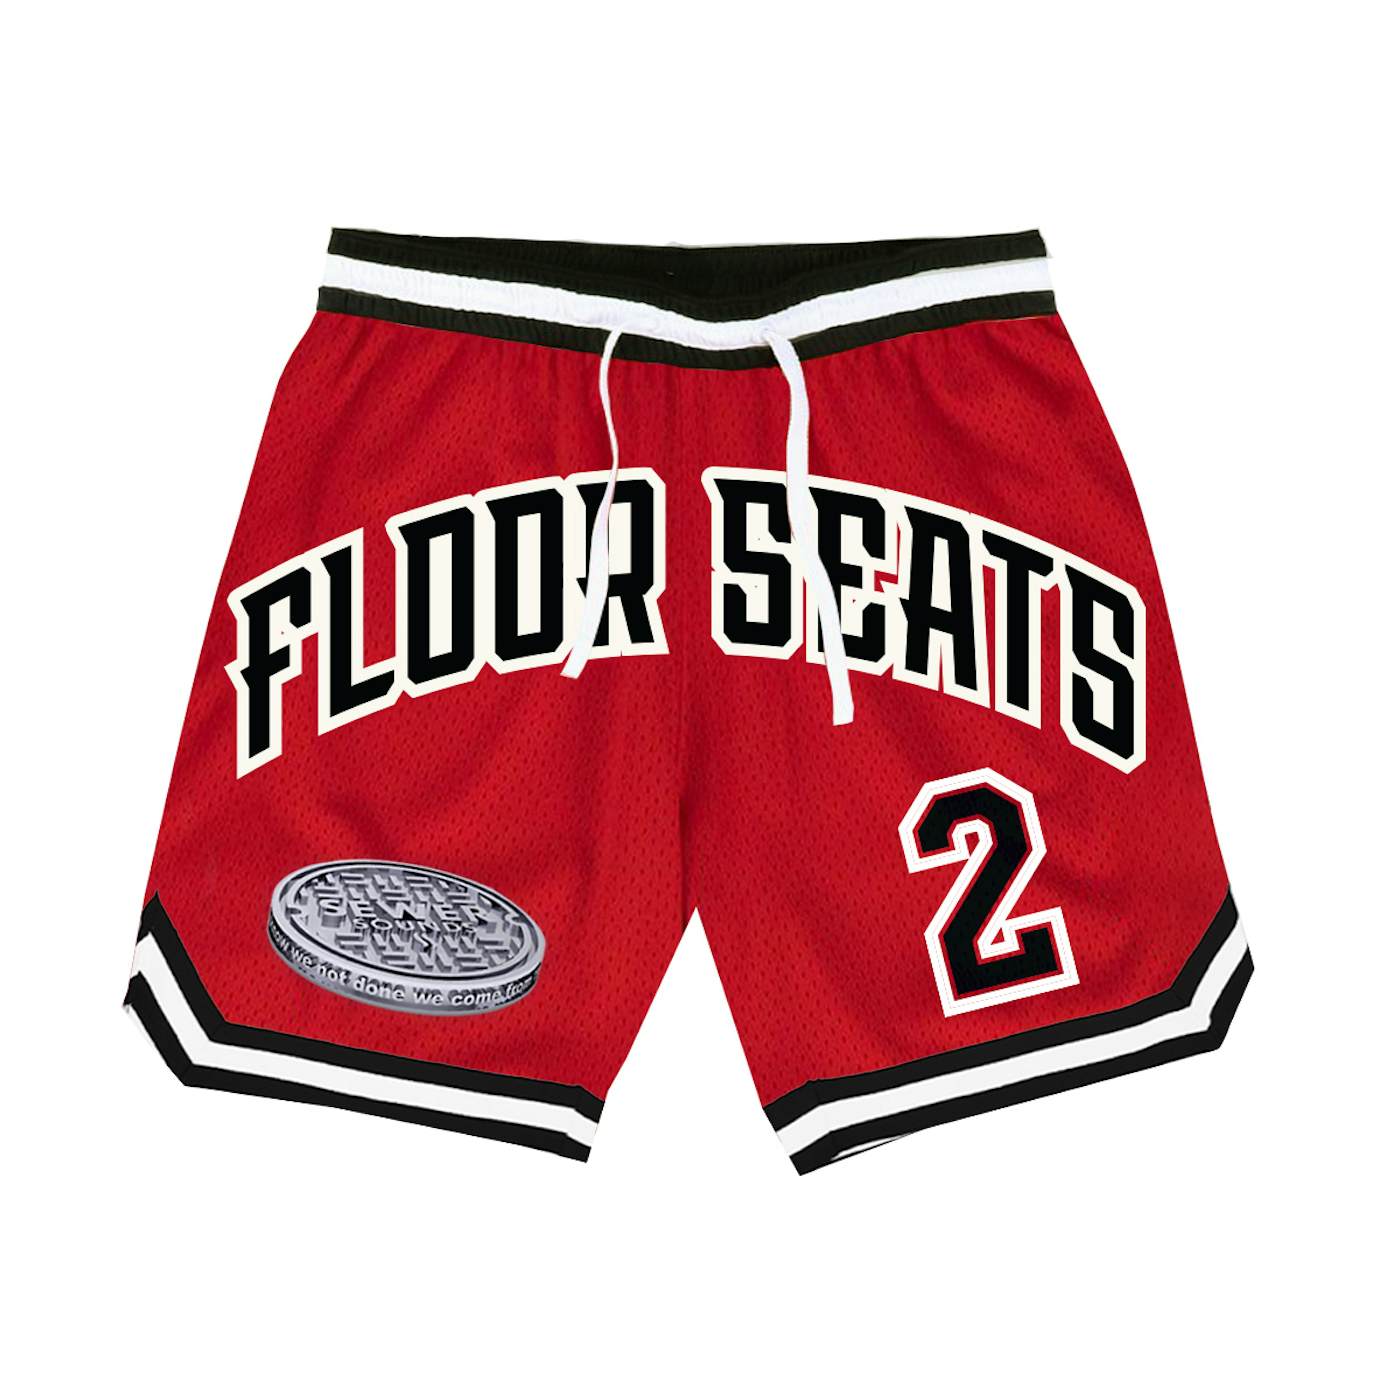 A$AP Ferg Floor Seats II Basketball Shorts